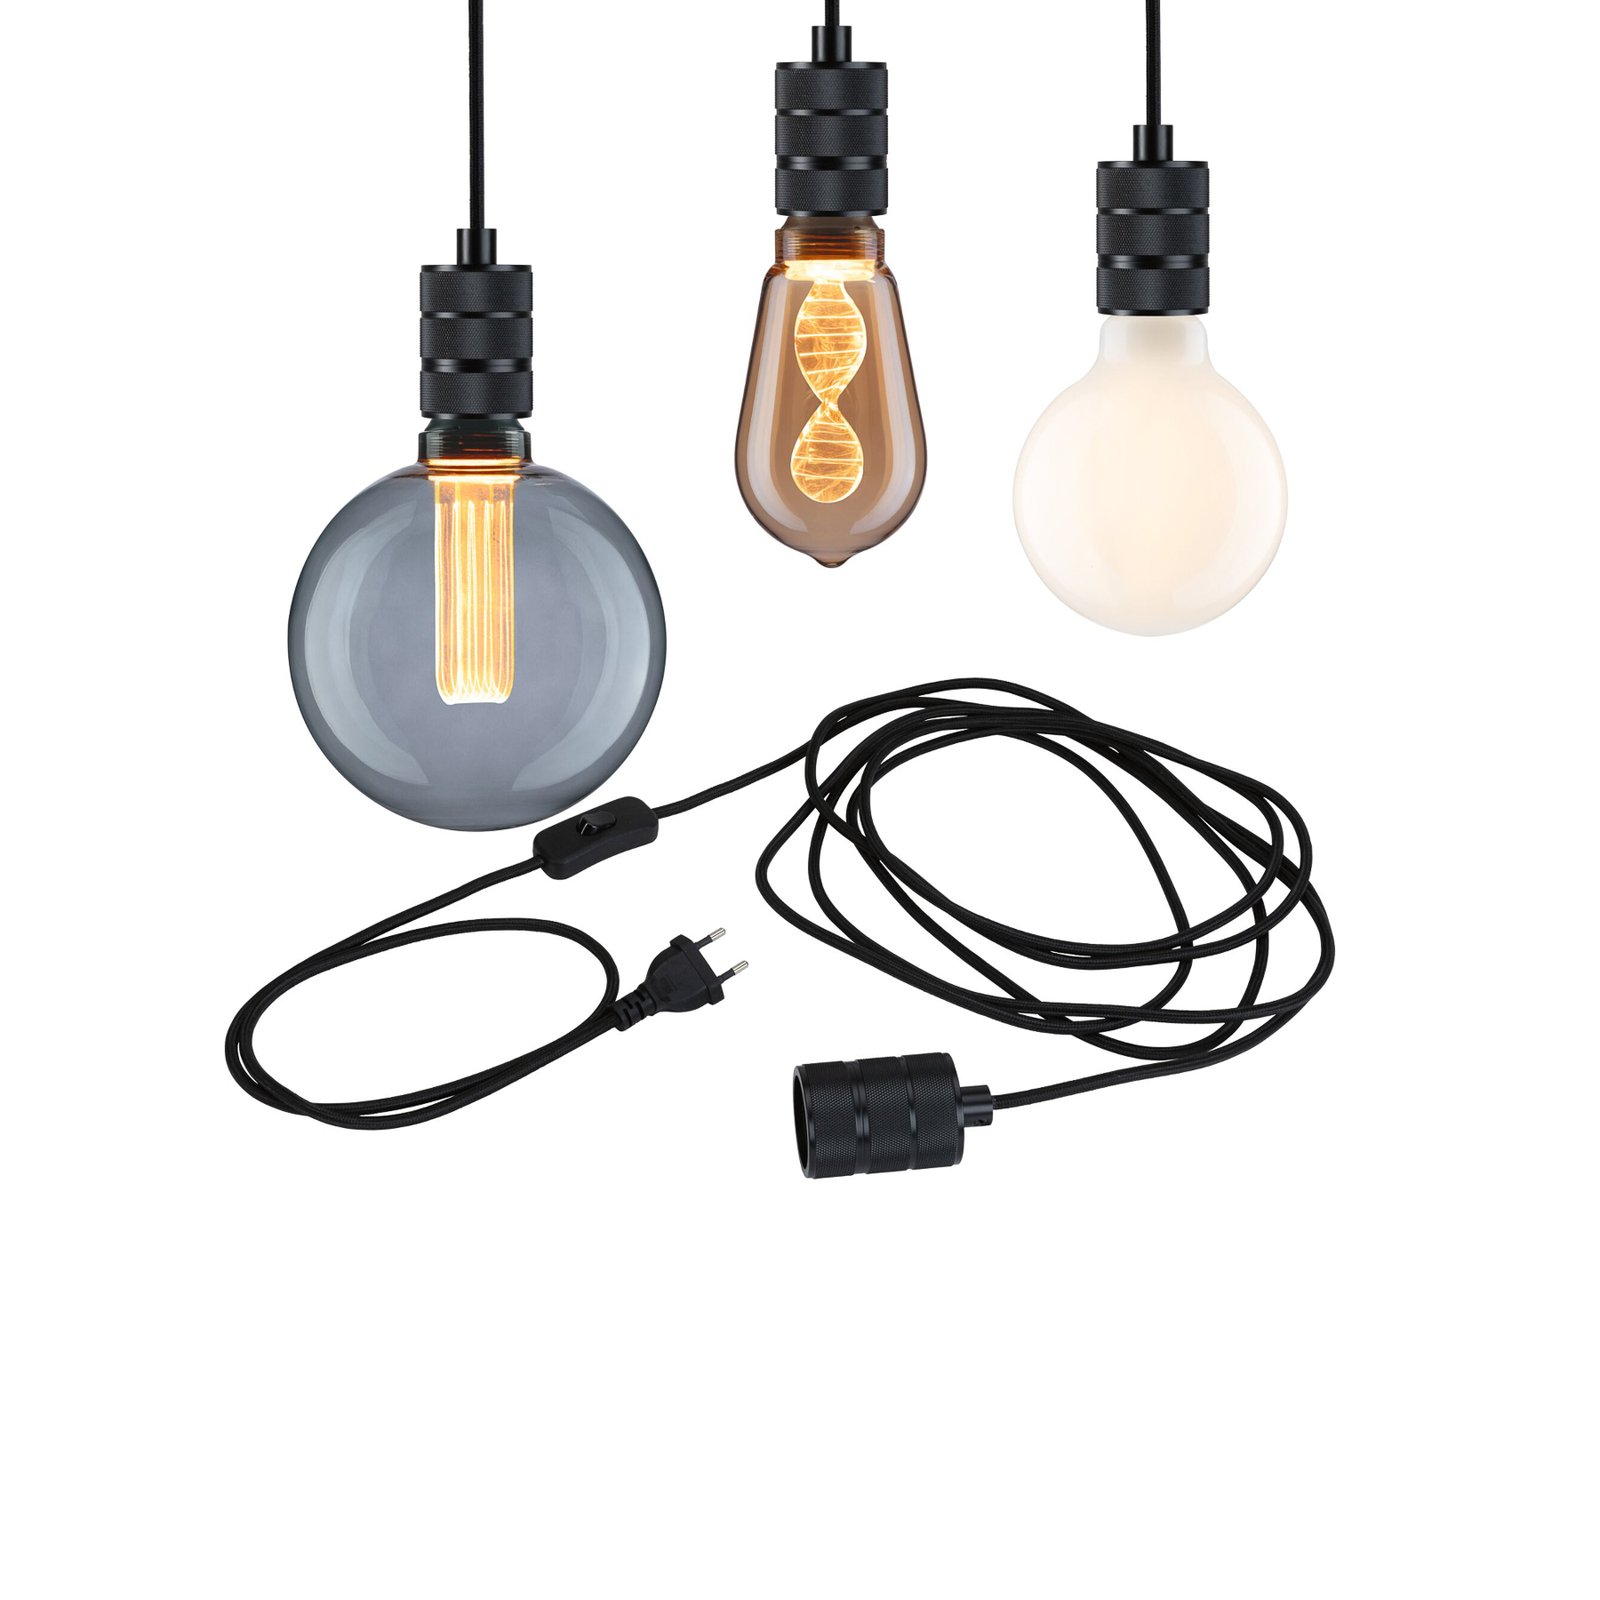 Paulmann Neordic Tilla hanging light plug black